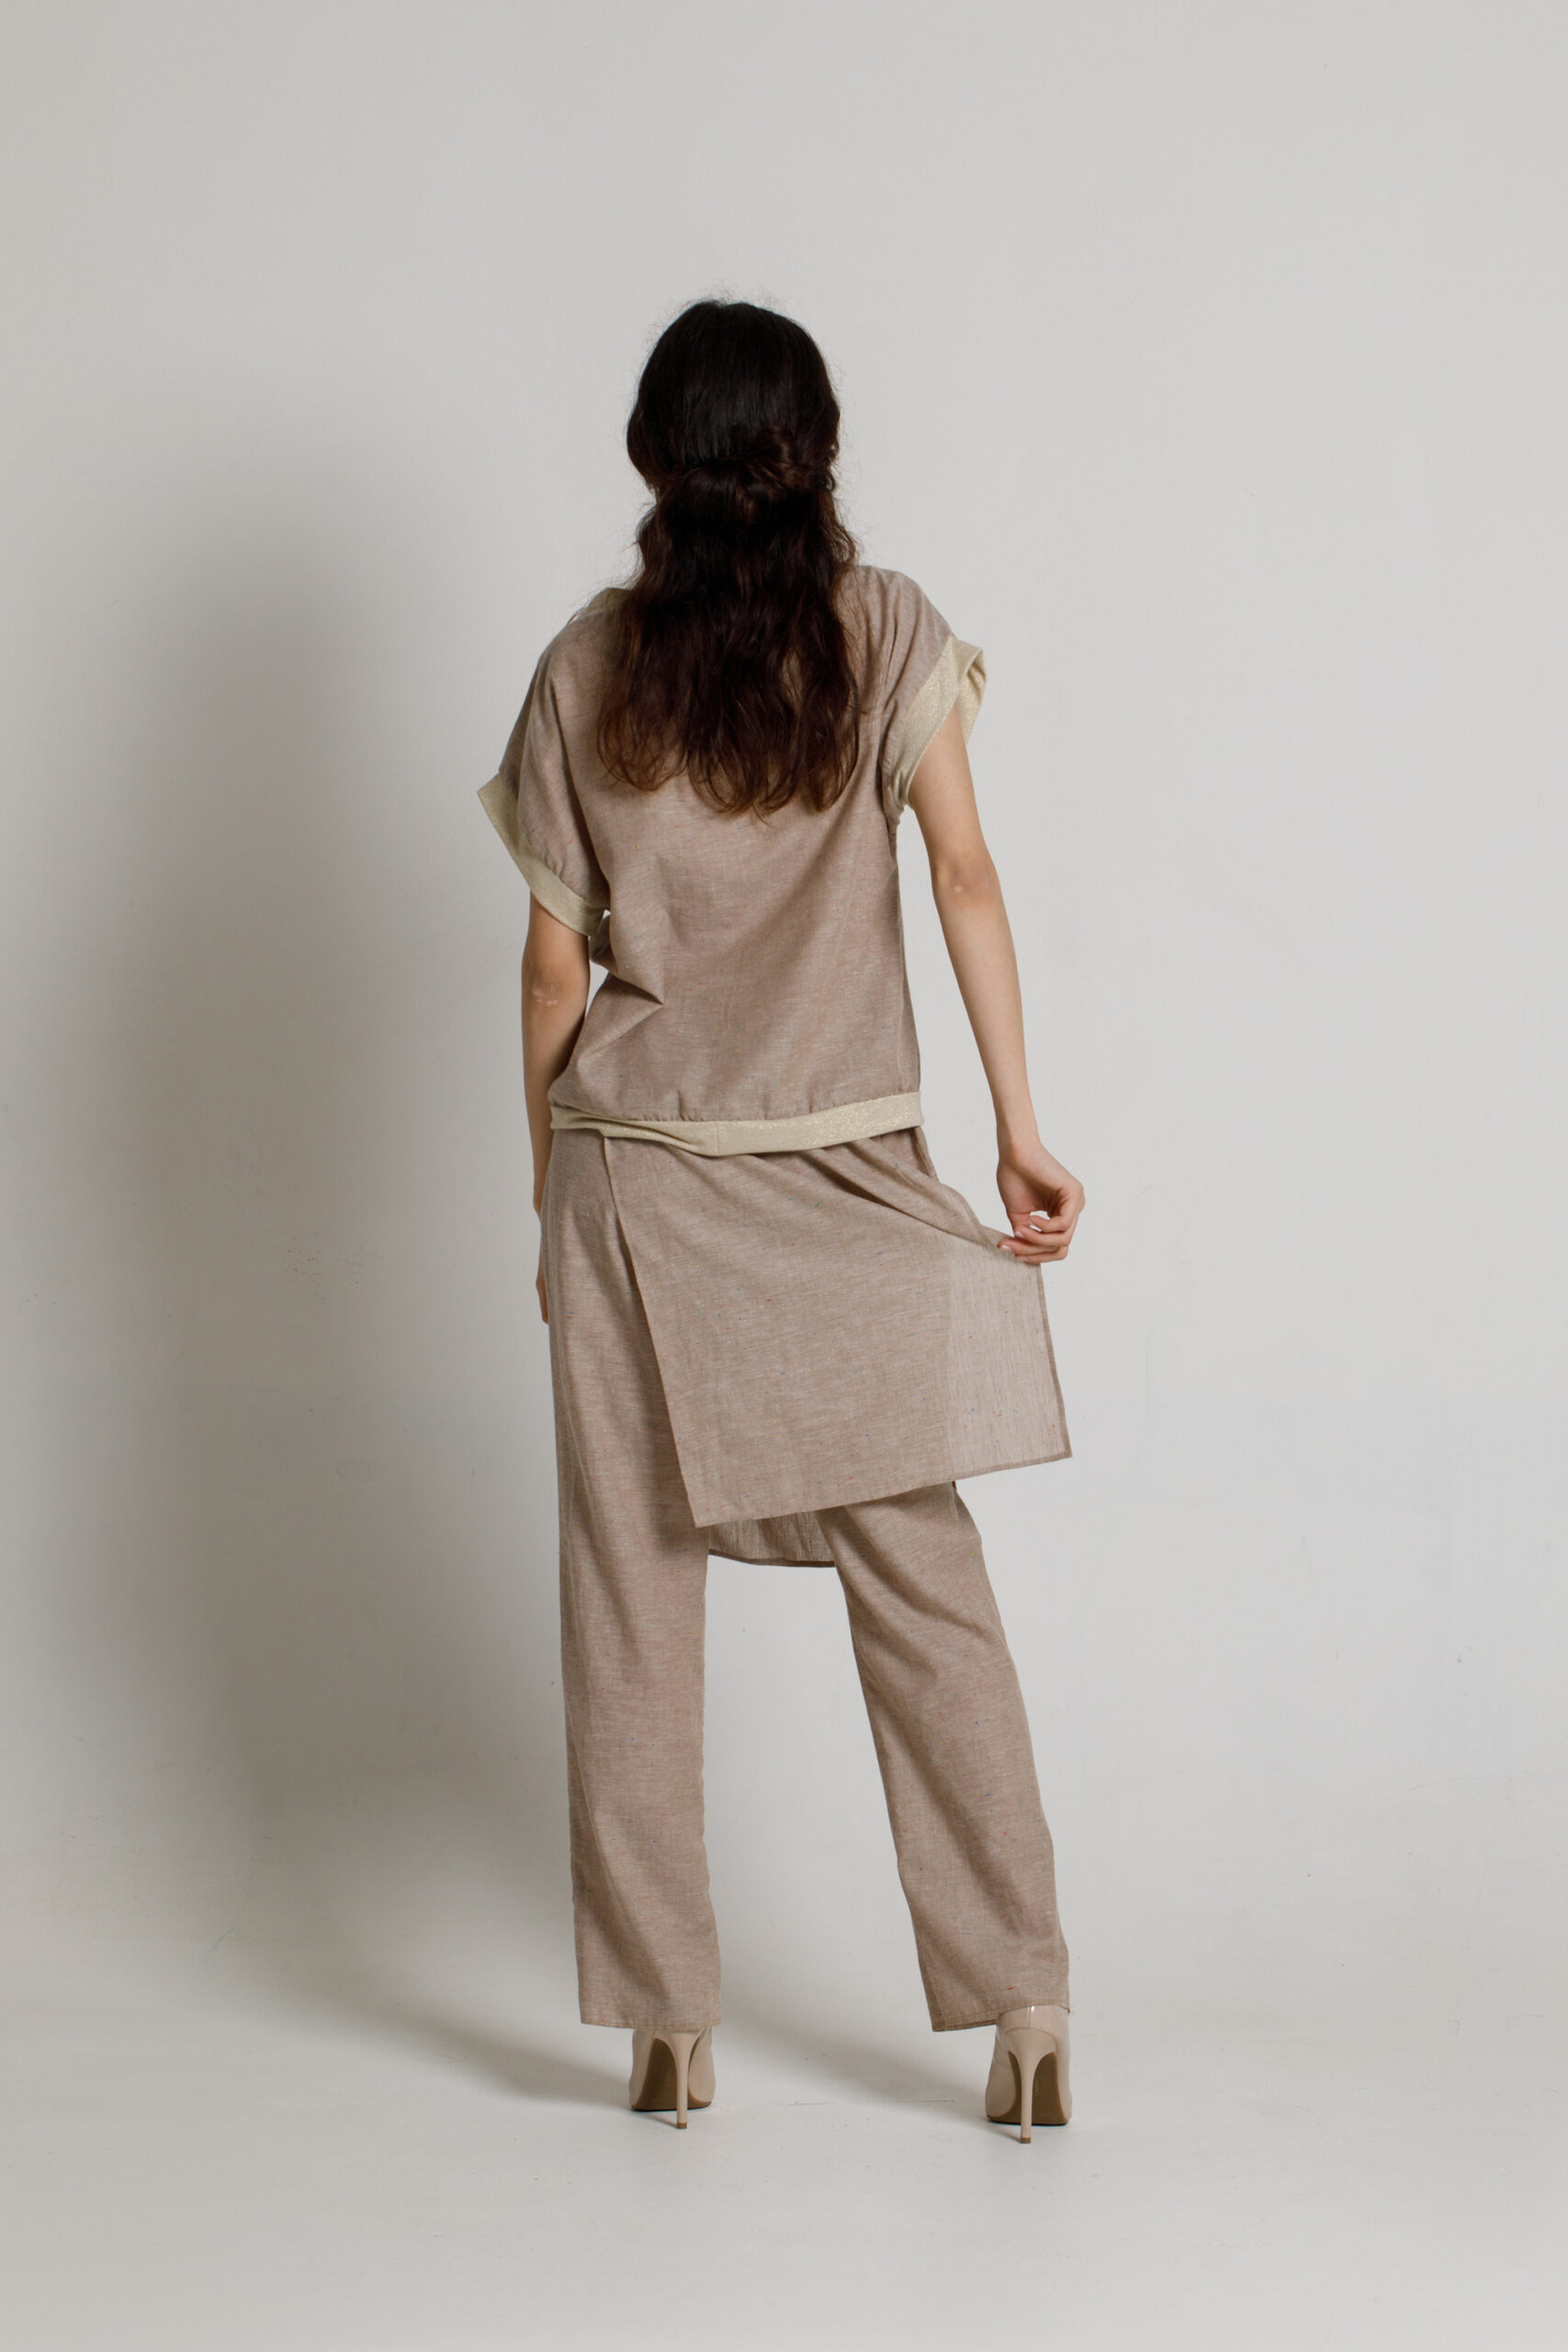 Pantalon LEY casual din poplin si plasa. Materiale naturale, design unicat, cu broderie si aplicatii handmade